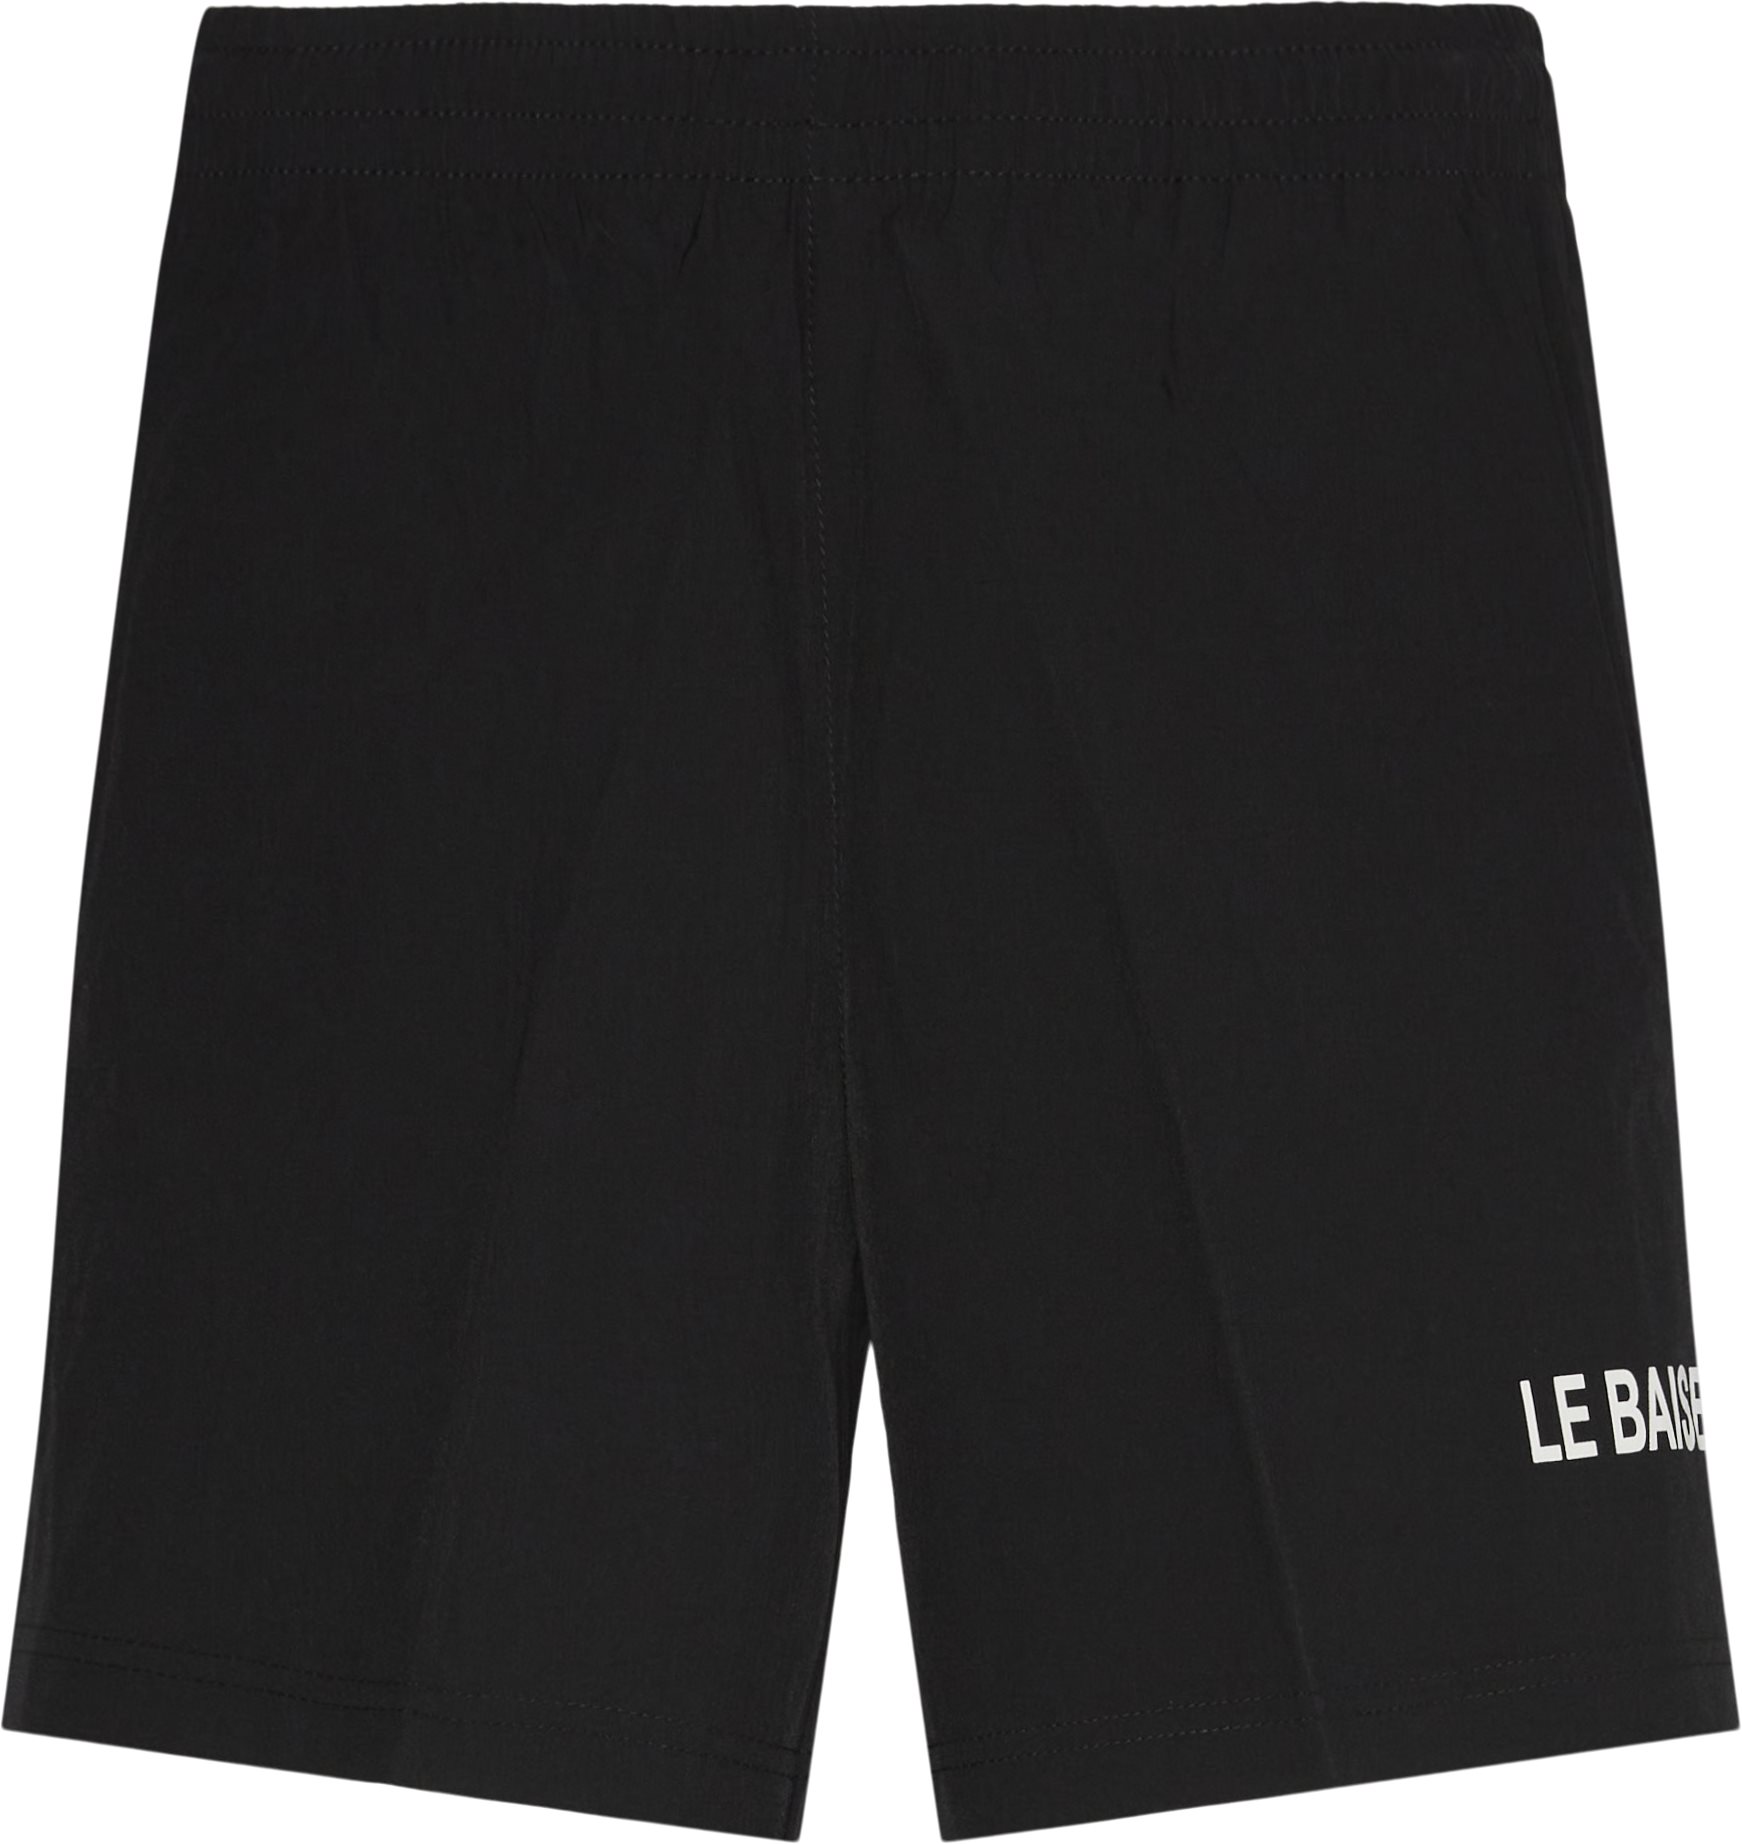 Fraise Shorts - Shorts - Regular fit - Black